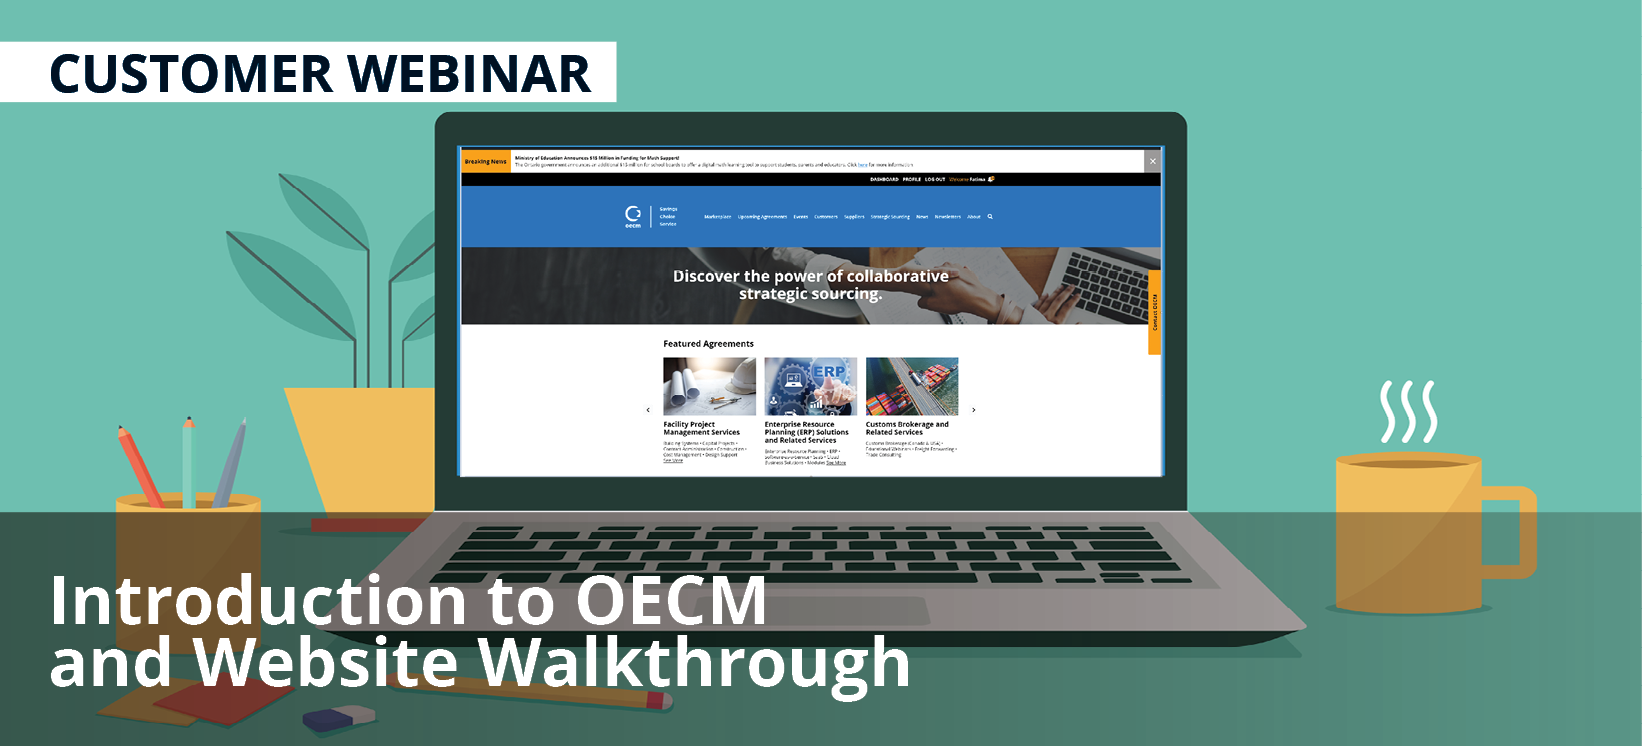 Customer Webinar: Introduction to OECM and Website Walkthrough